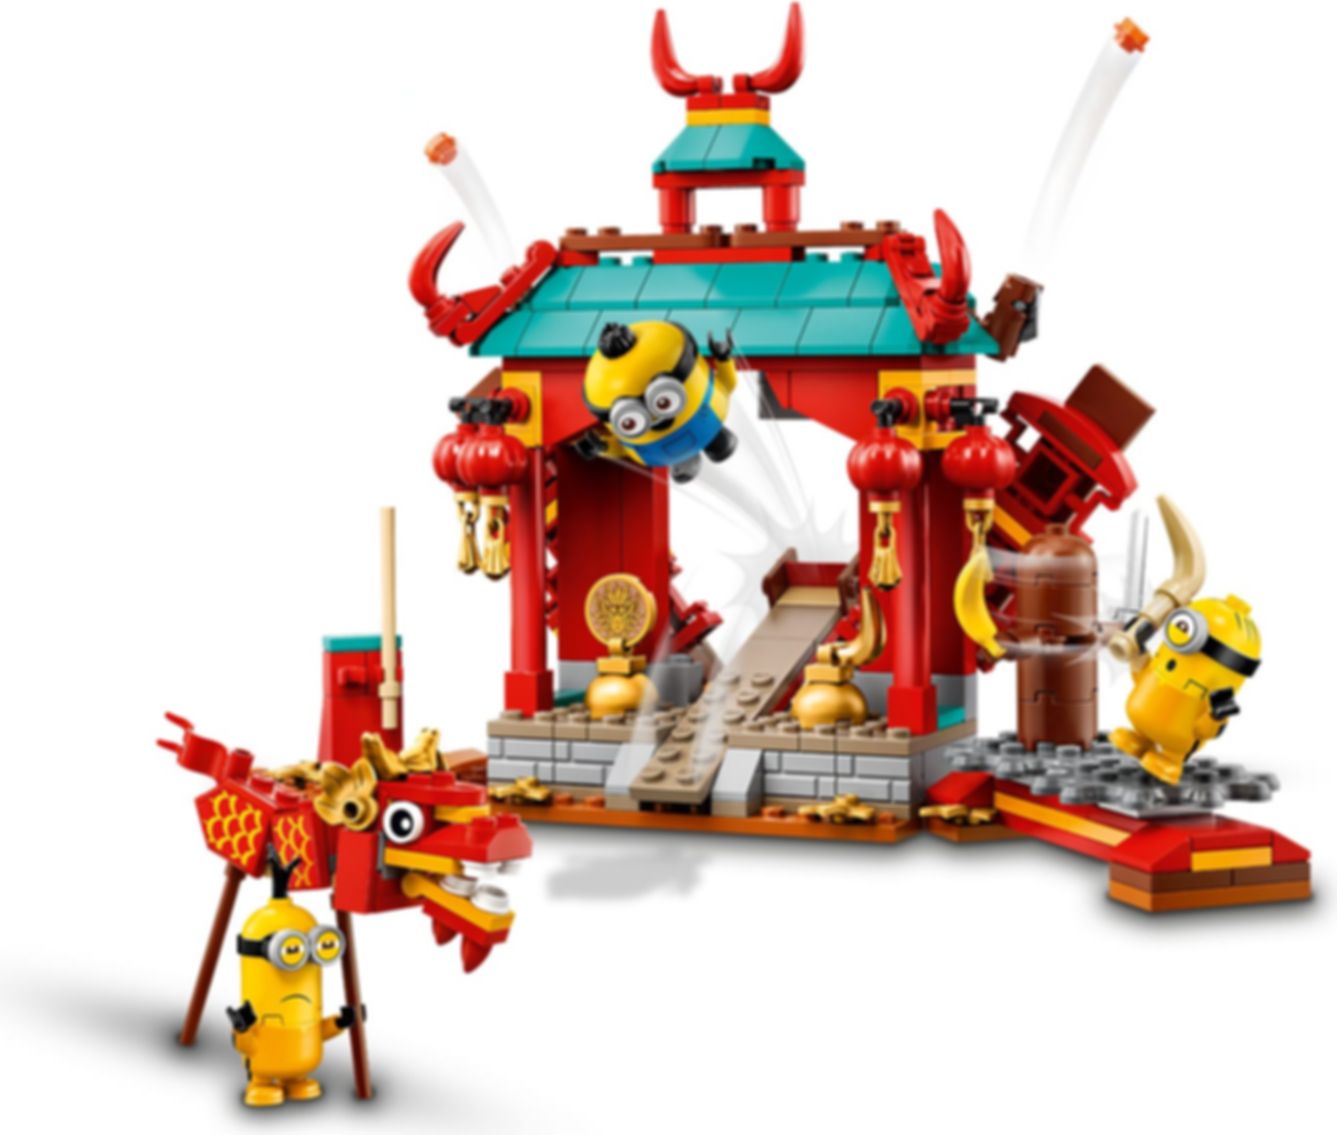 LEGO® Minions Minions kungfugevecht speelwijze